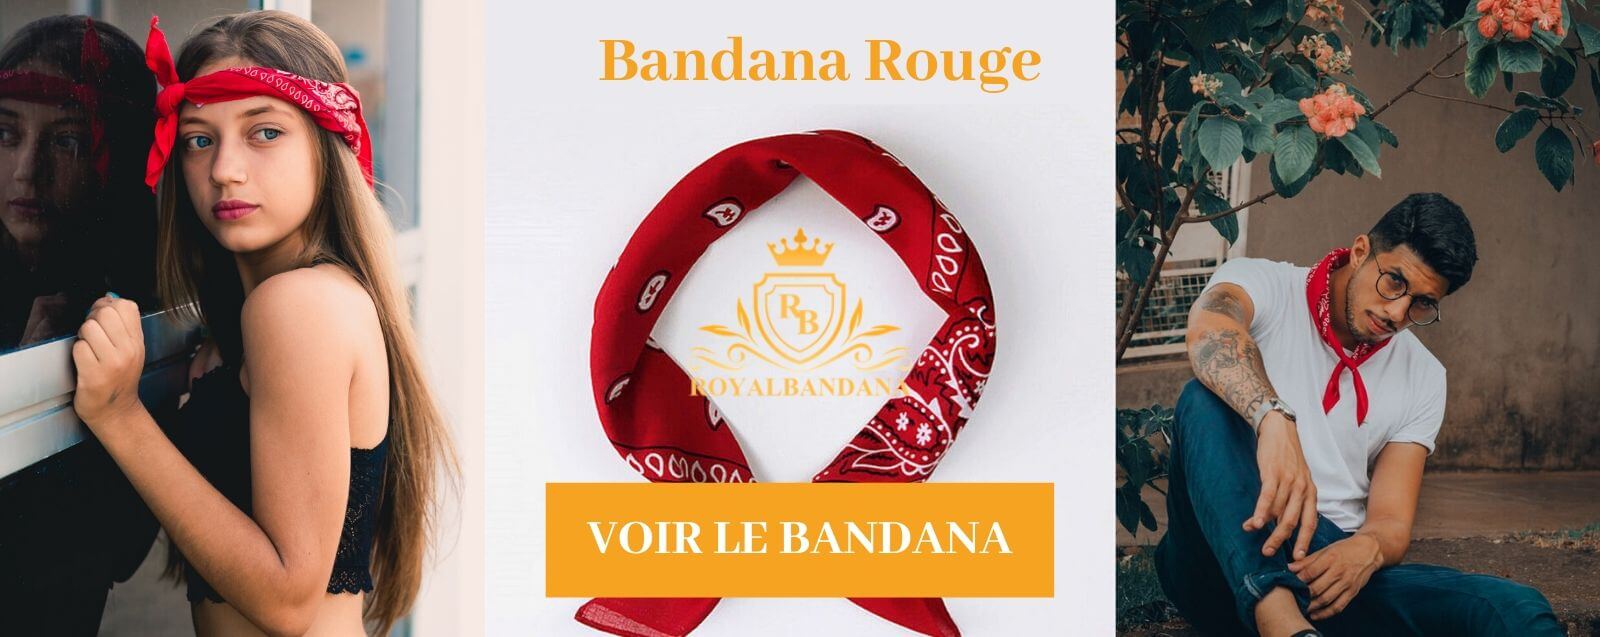 voir bandana rouge royalbandana acheter